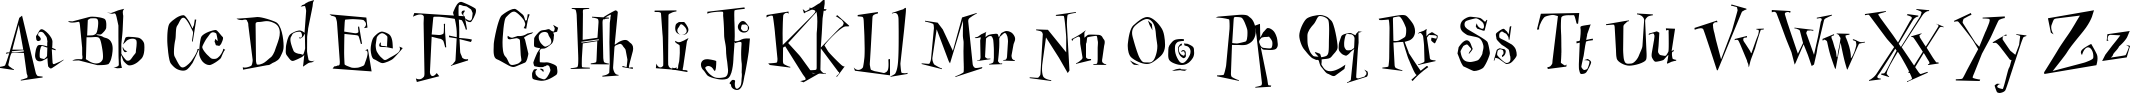 Пример написания английского алфавита шрифтом Cheshirskiy Cat Roman